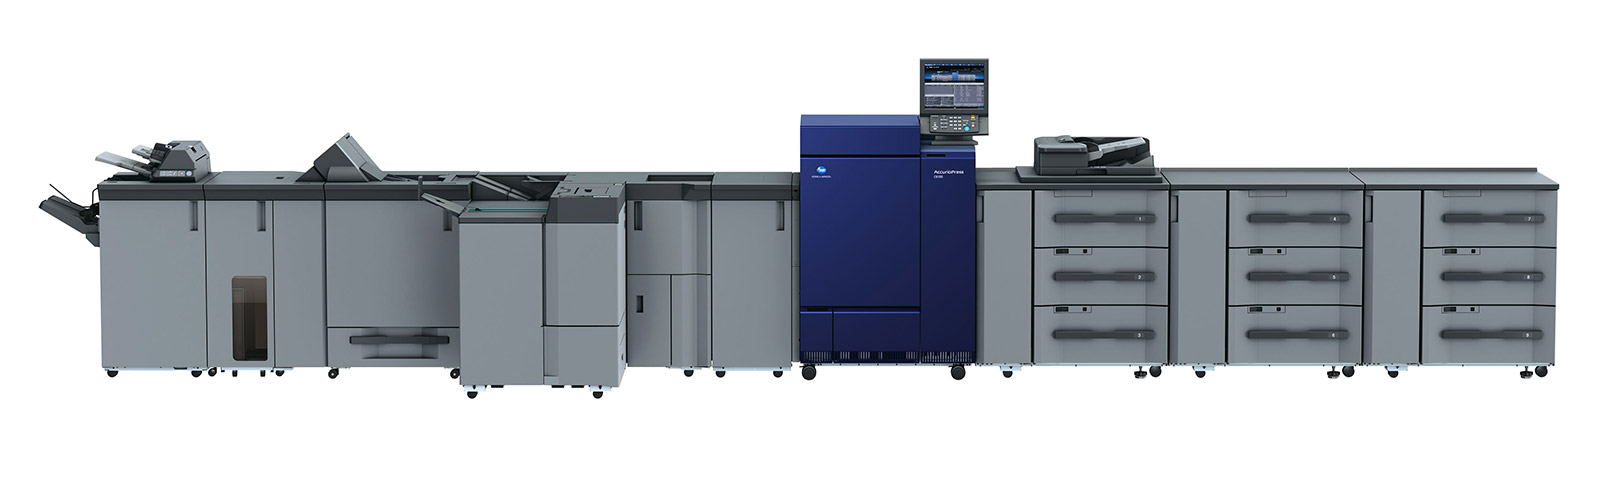 Konica Minolta AccurioPress C6100 Production Print System